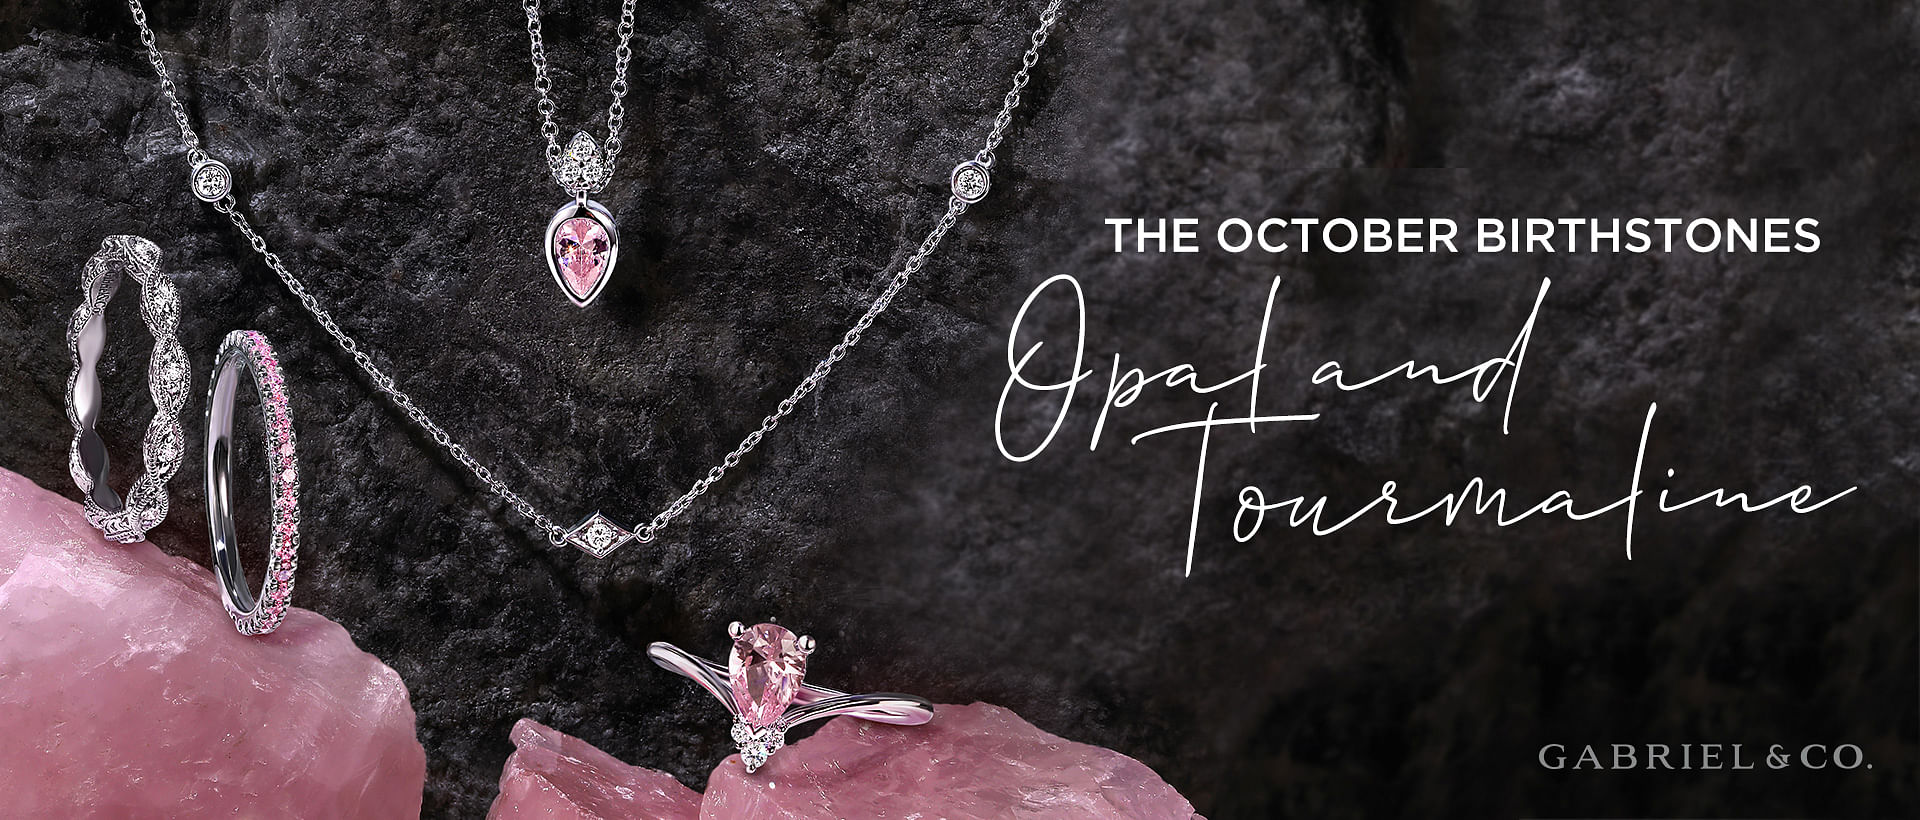 October Birthstone Guide - Opal and Tourmaline | Joseph's Jewelry